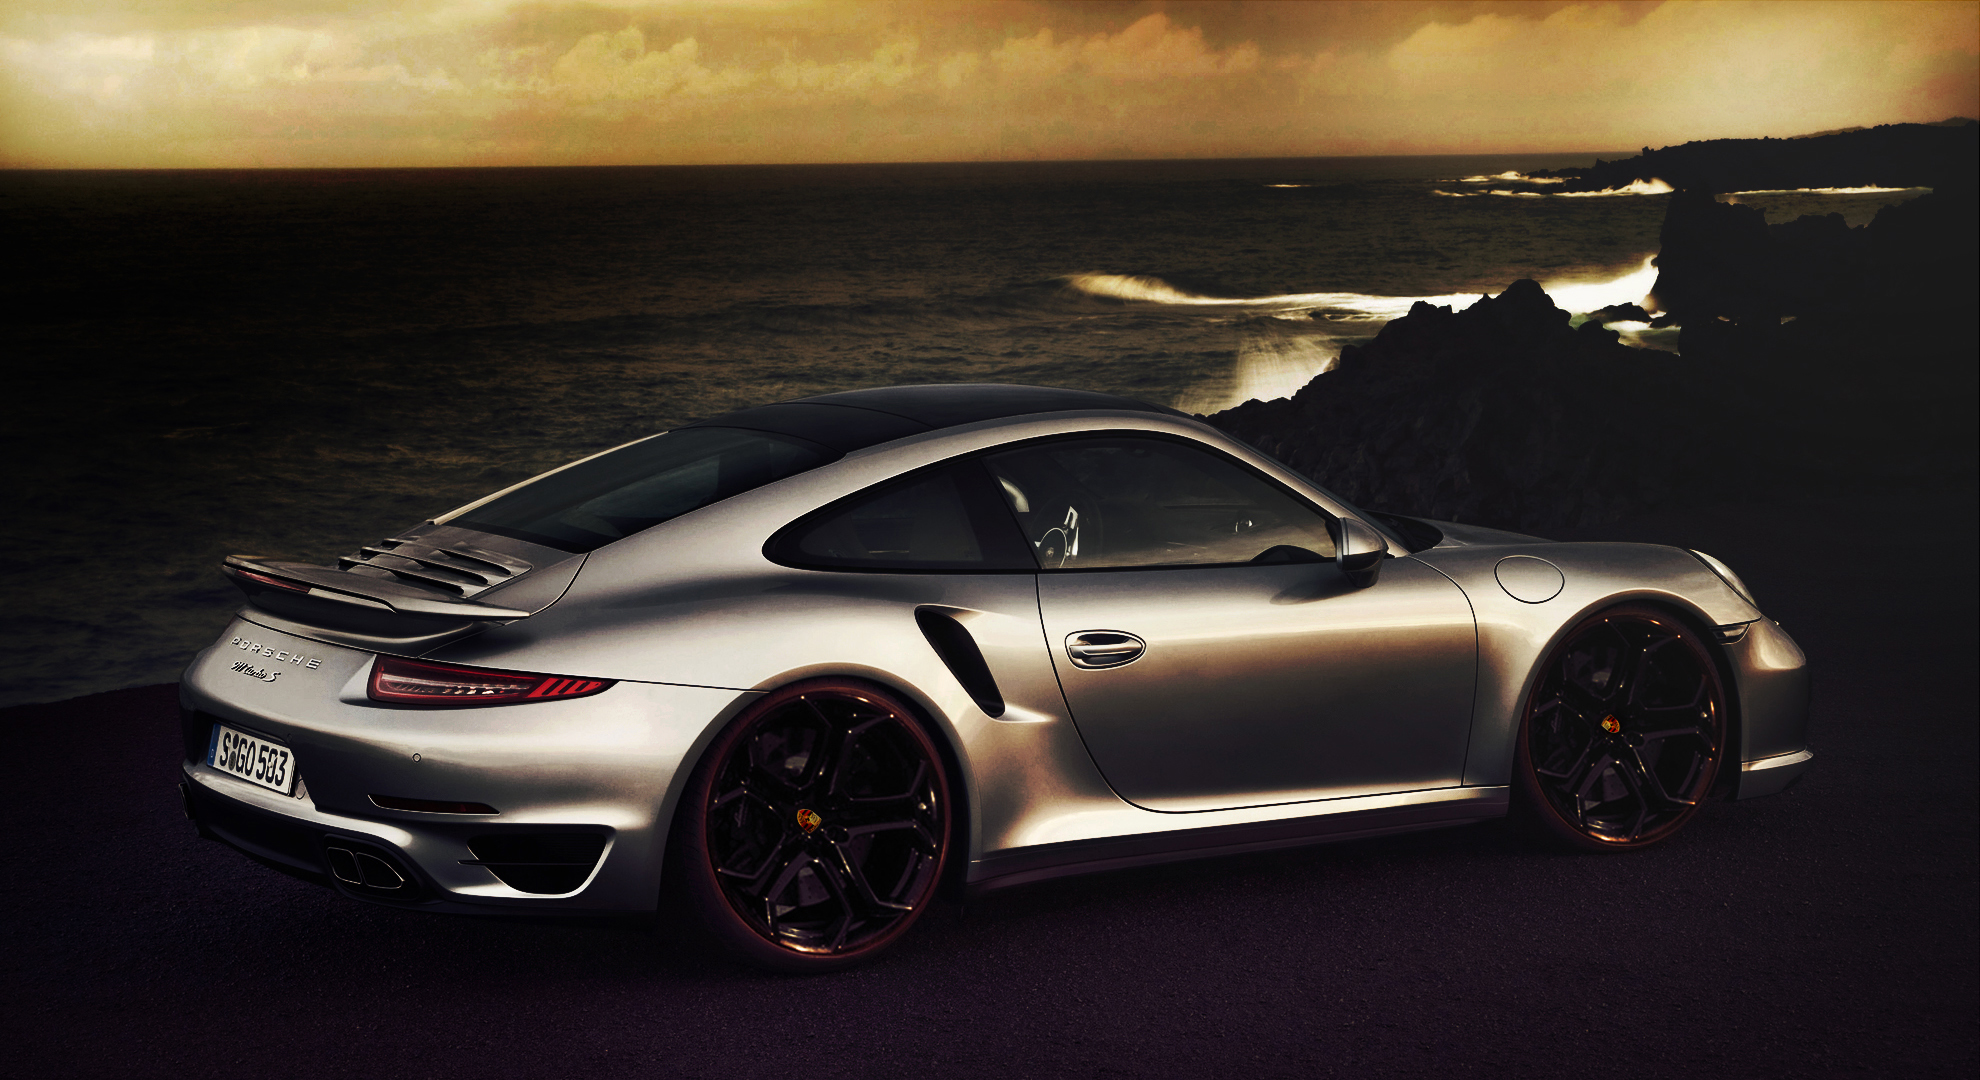 Free Download Porsche Turbo Hd Wallpaper Background Images X For Your Desktop